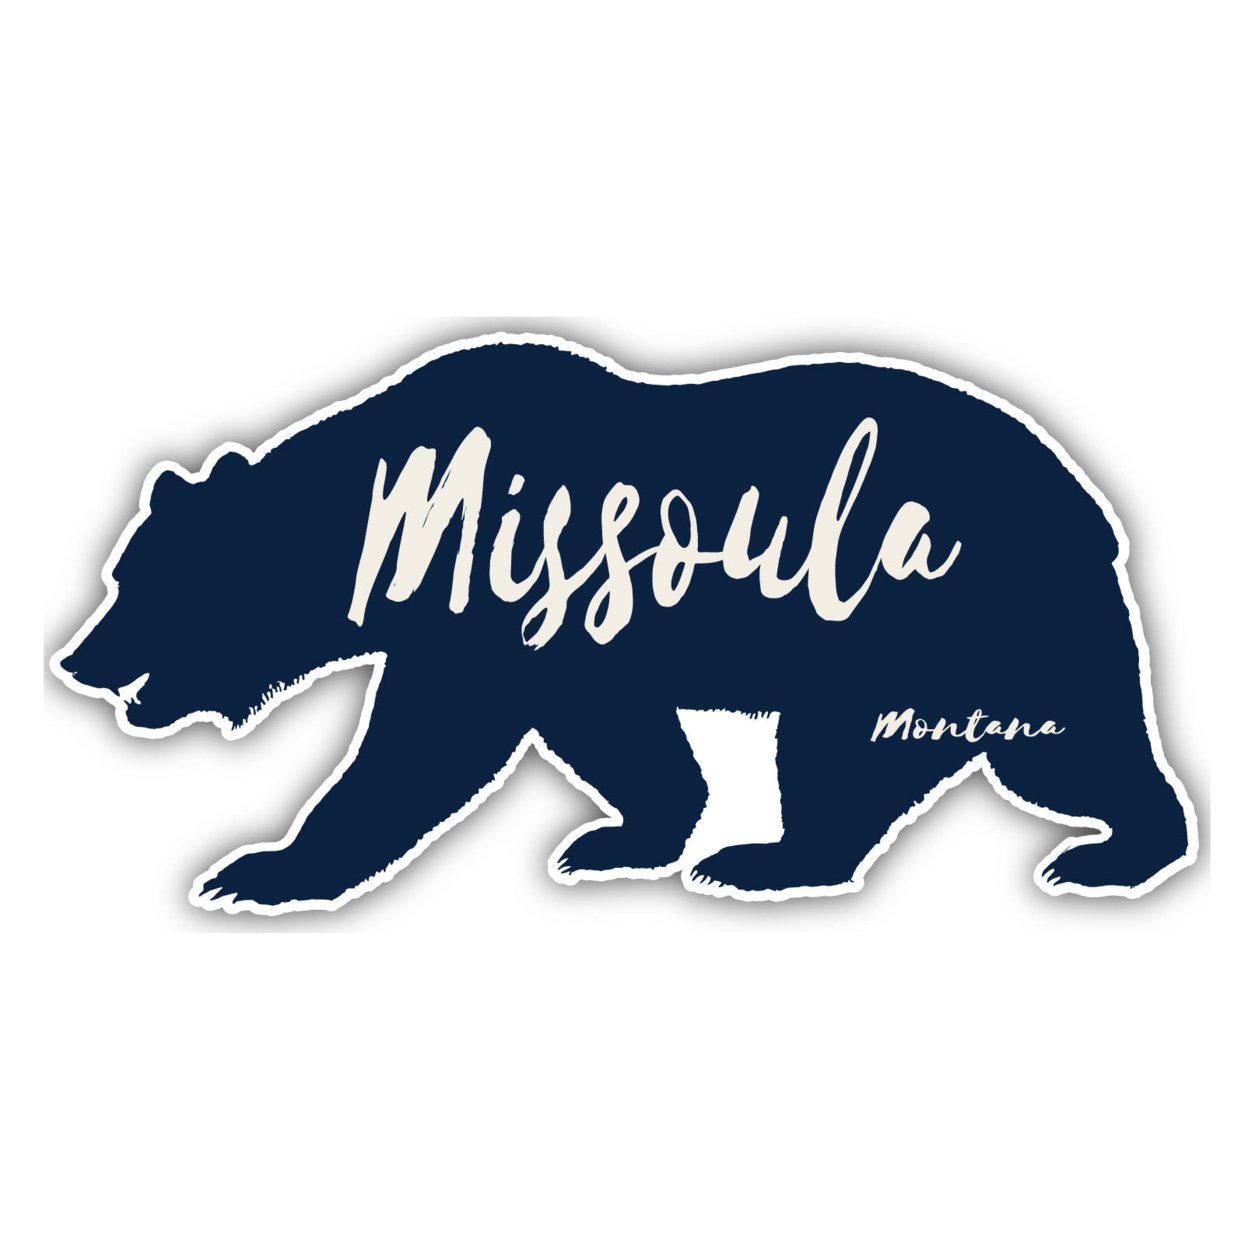 Missoula Montana Souvenir Decorative Stickers (Choose Theme And Size) - 2-Inch, Tent